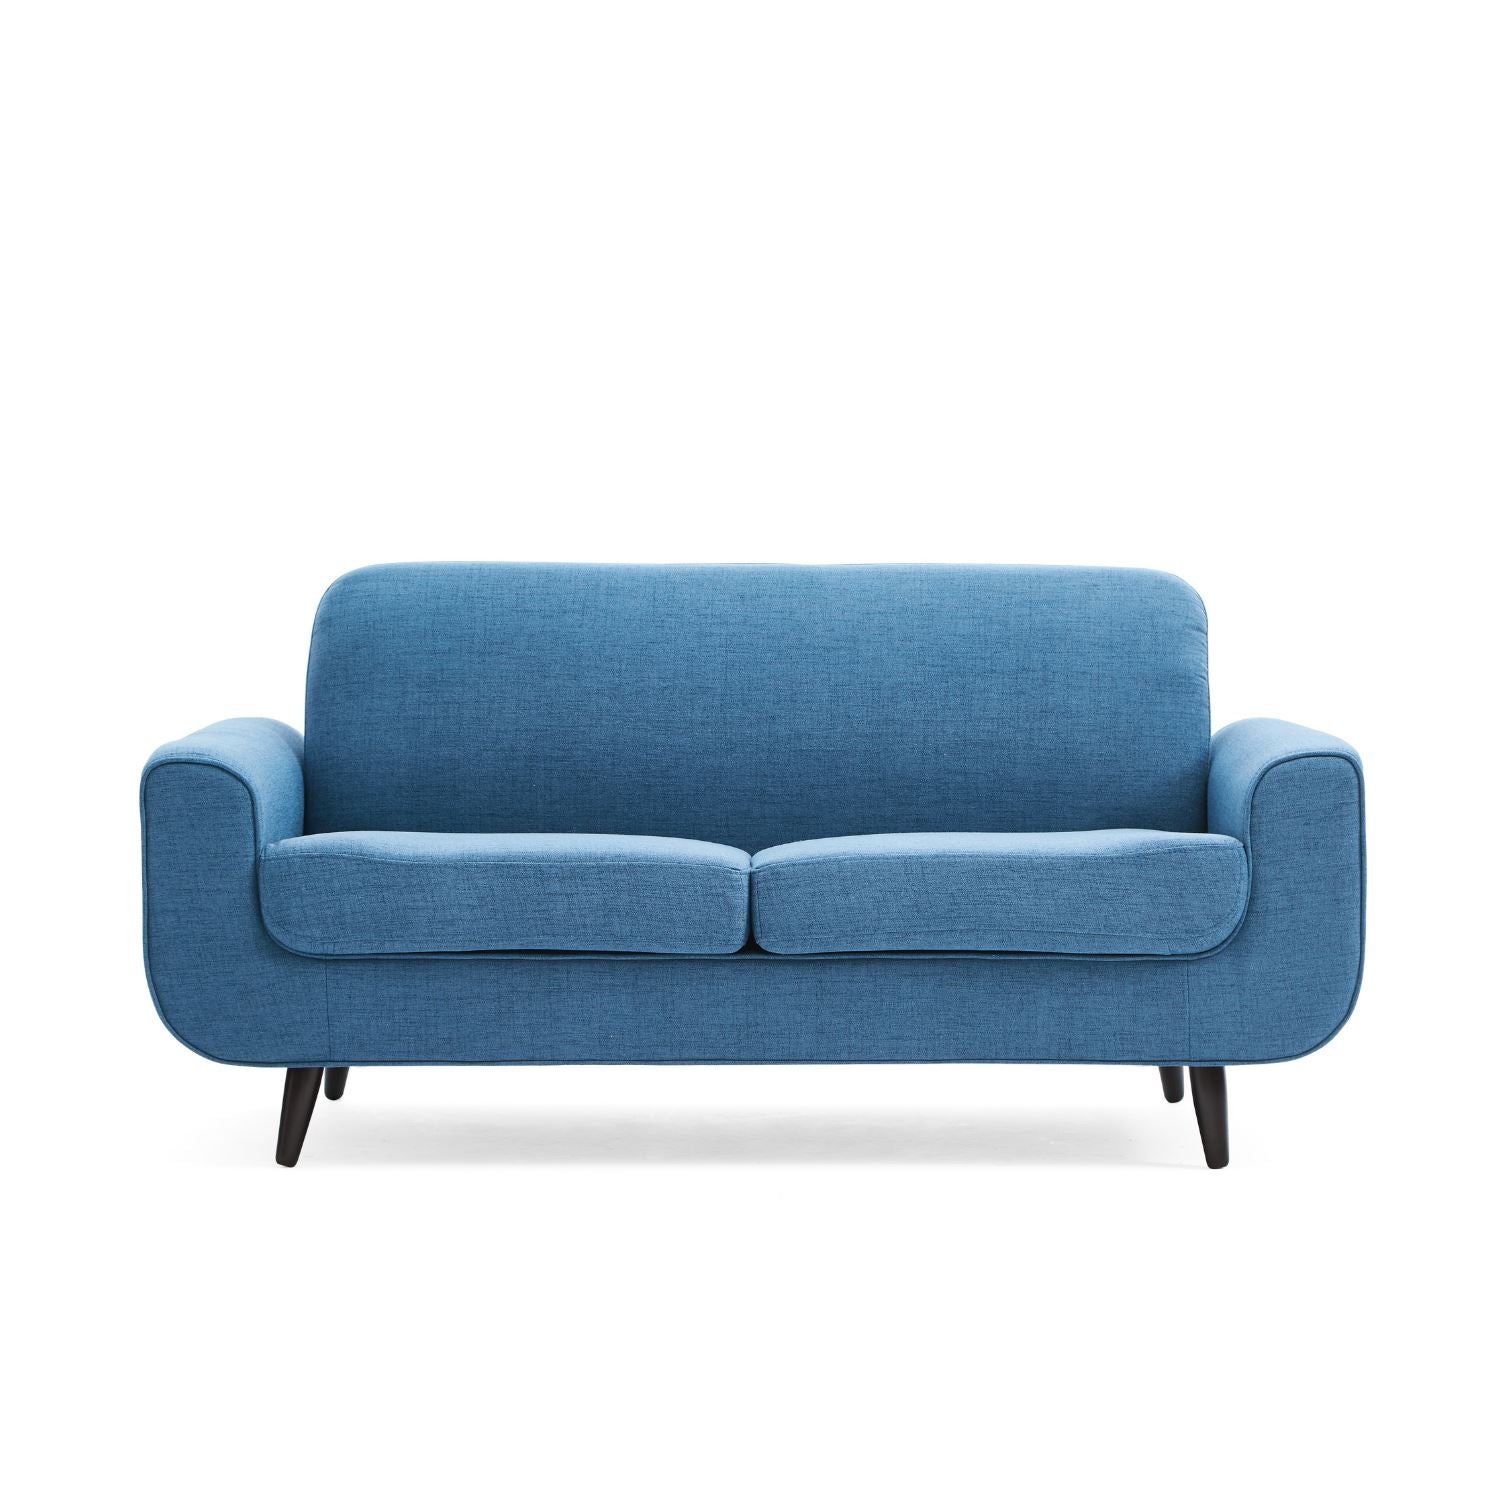 Valoren Loveseat Sofa Valyou Furniture Blue 